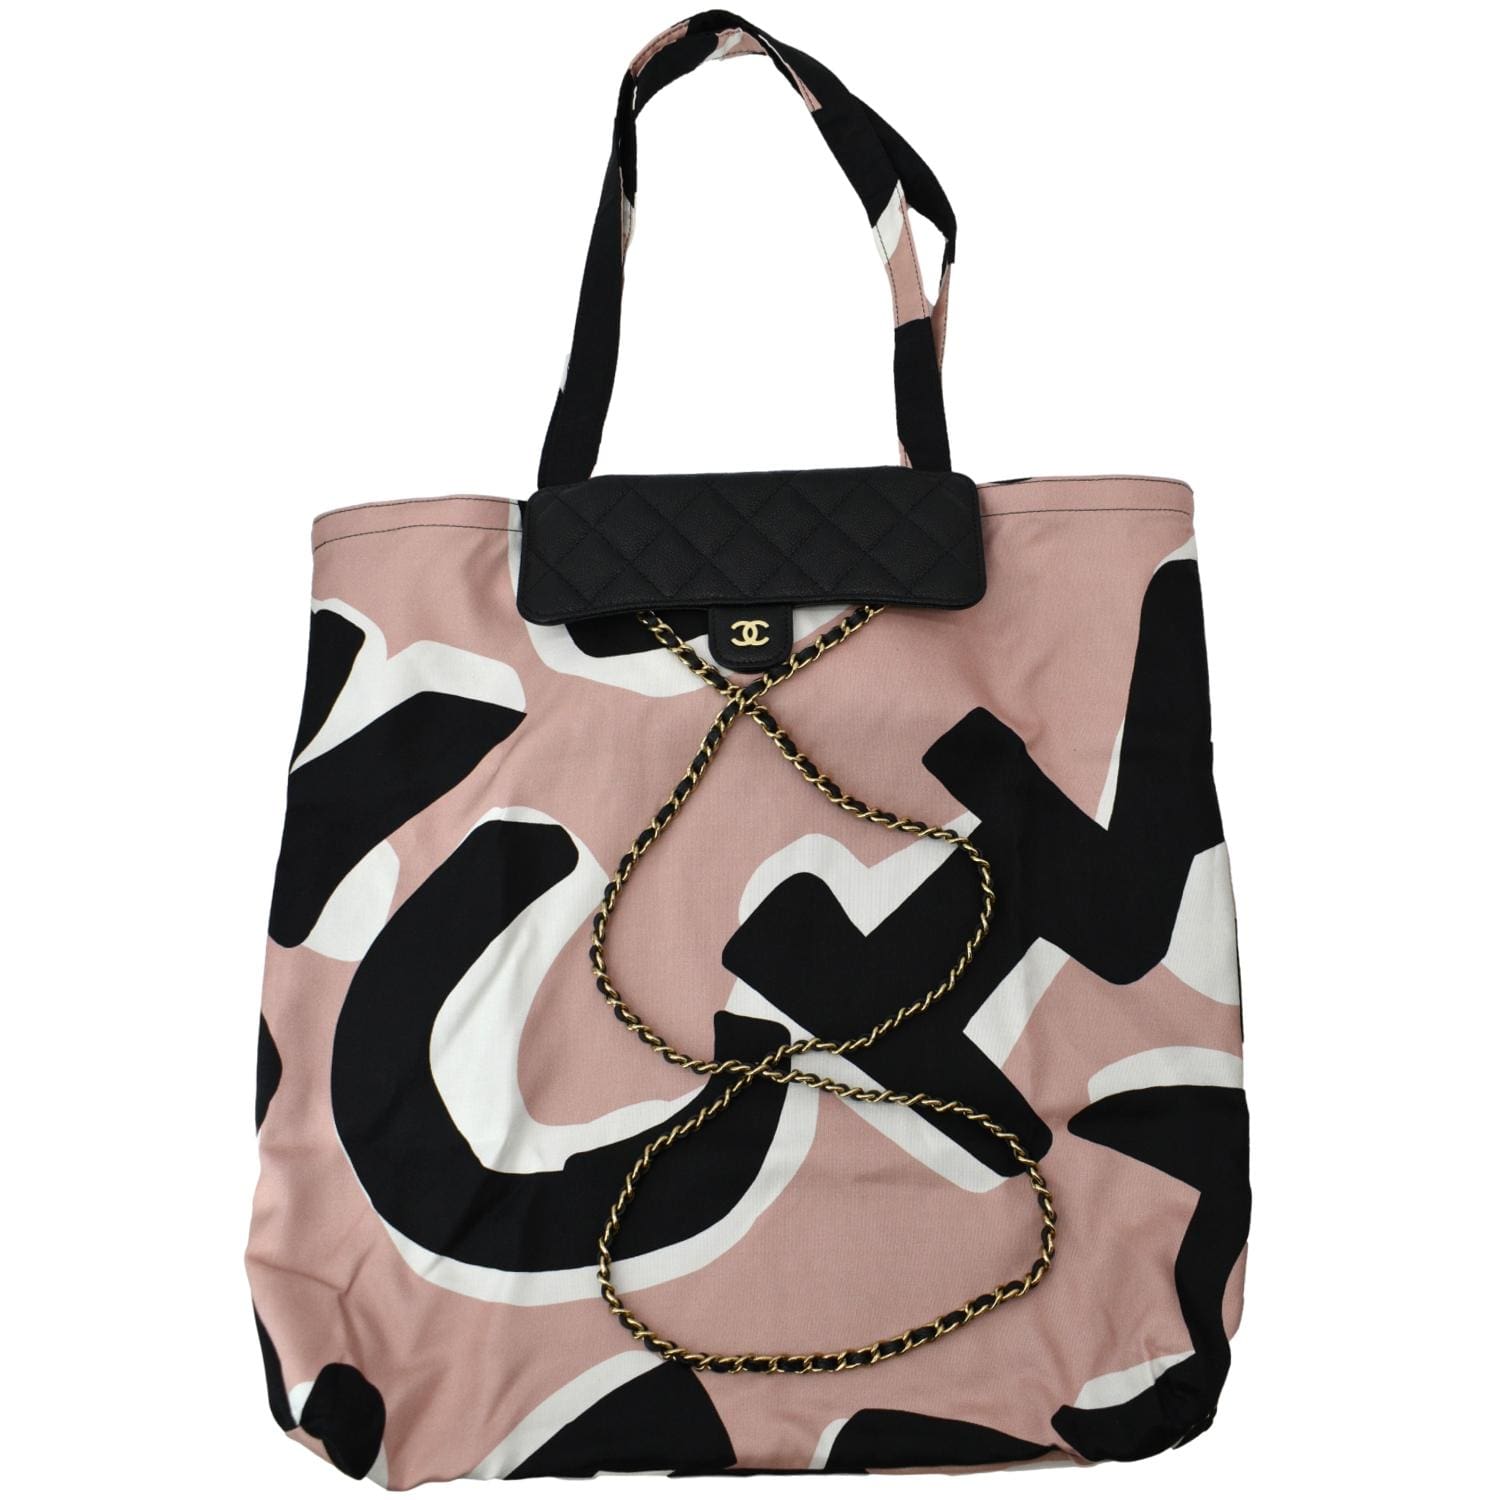 Chanel Women's 2way Foldable Leather Satchel Crossbody Bag